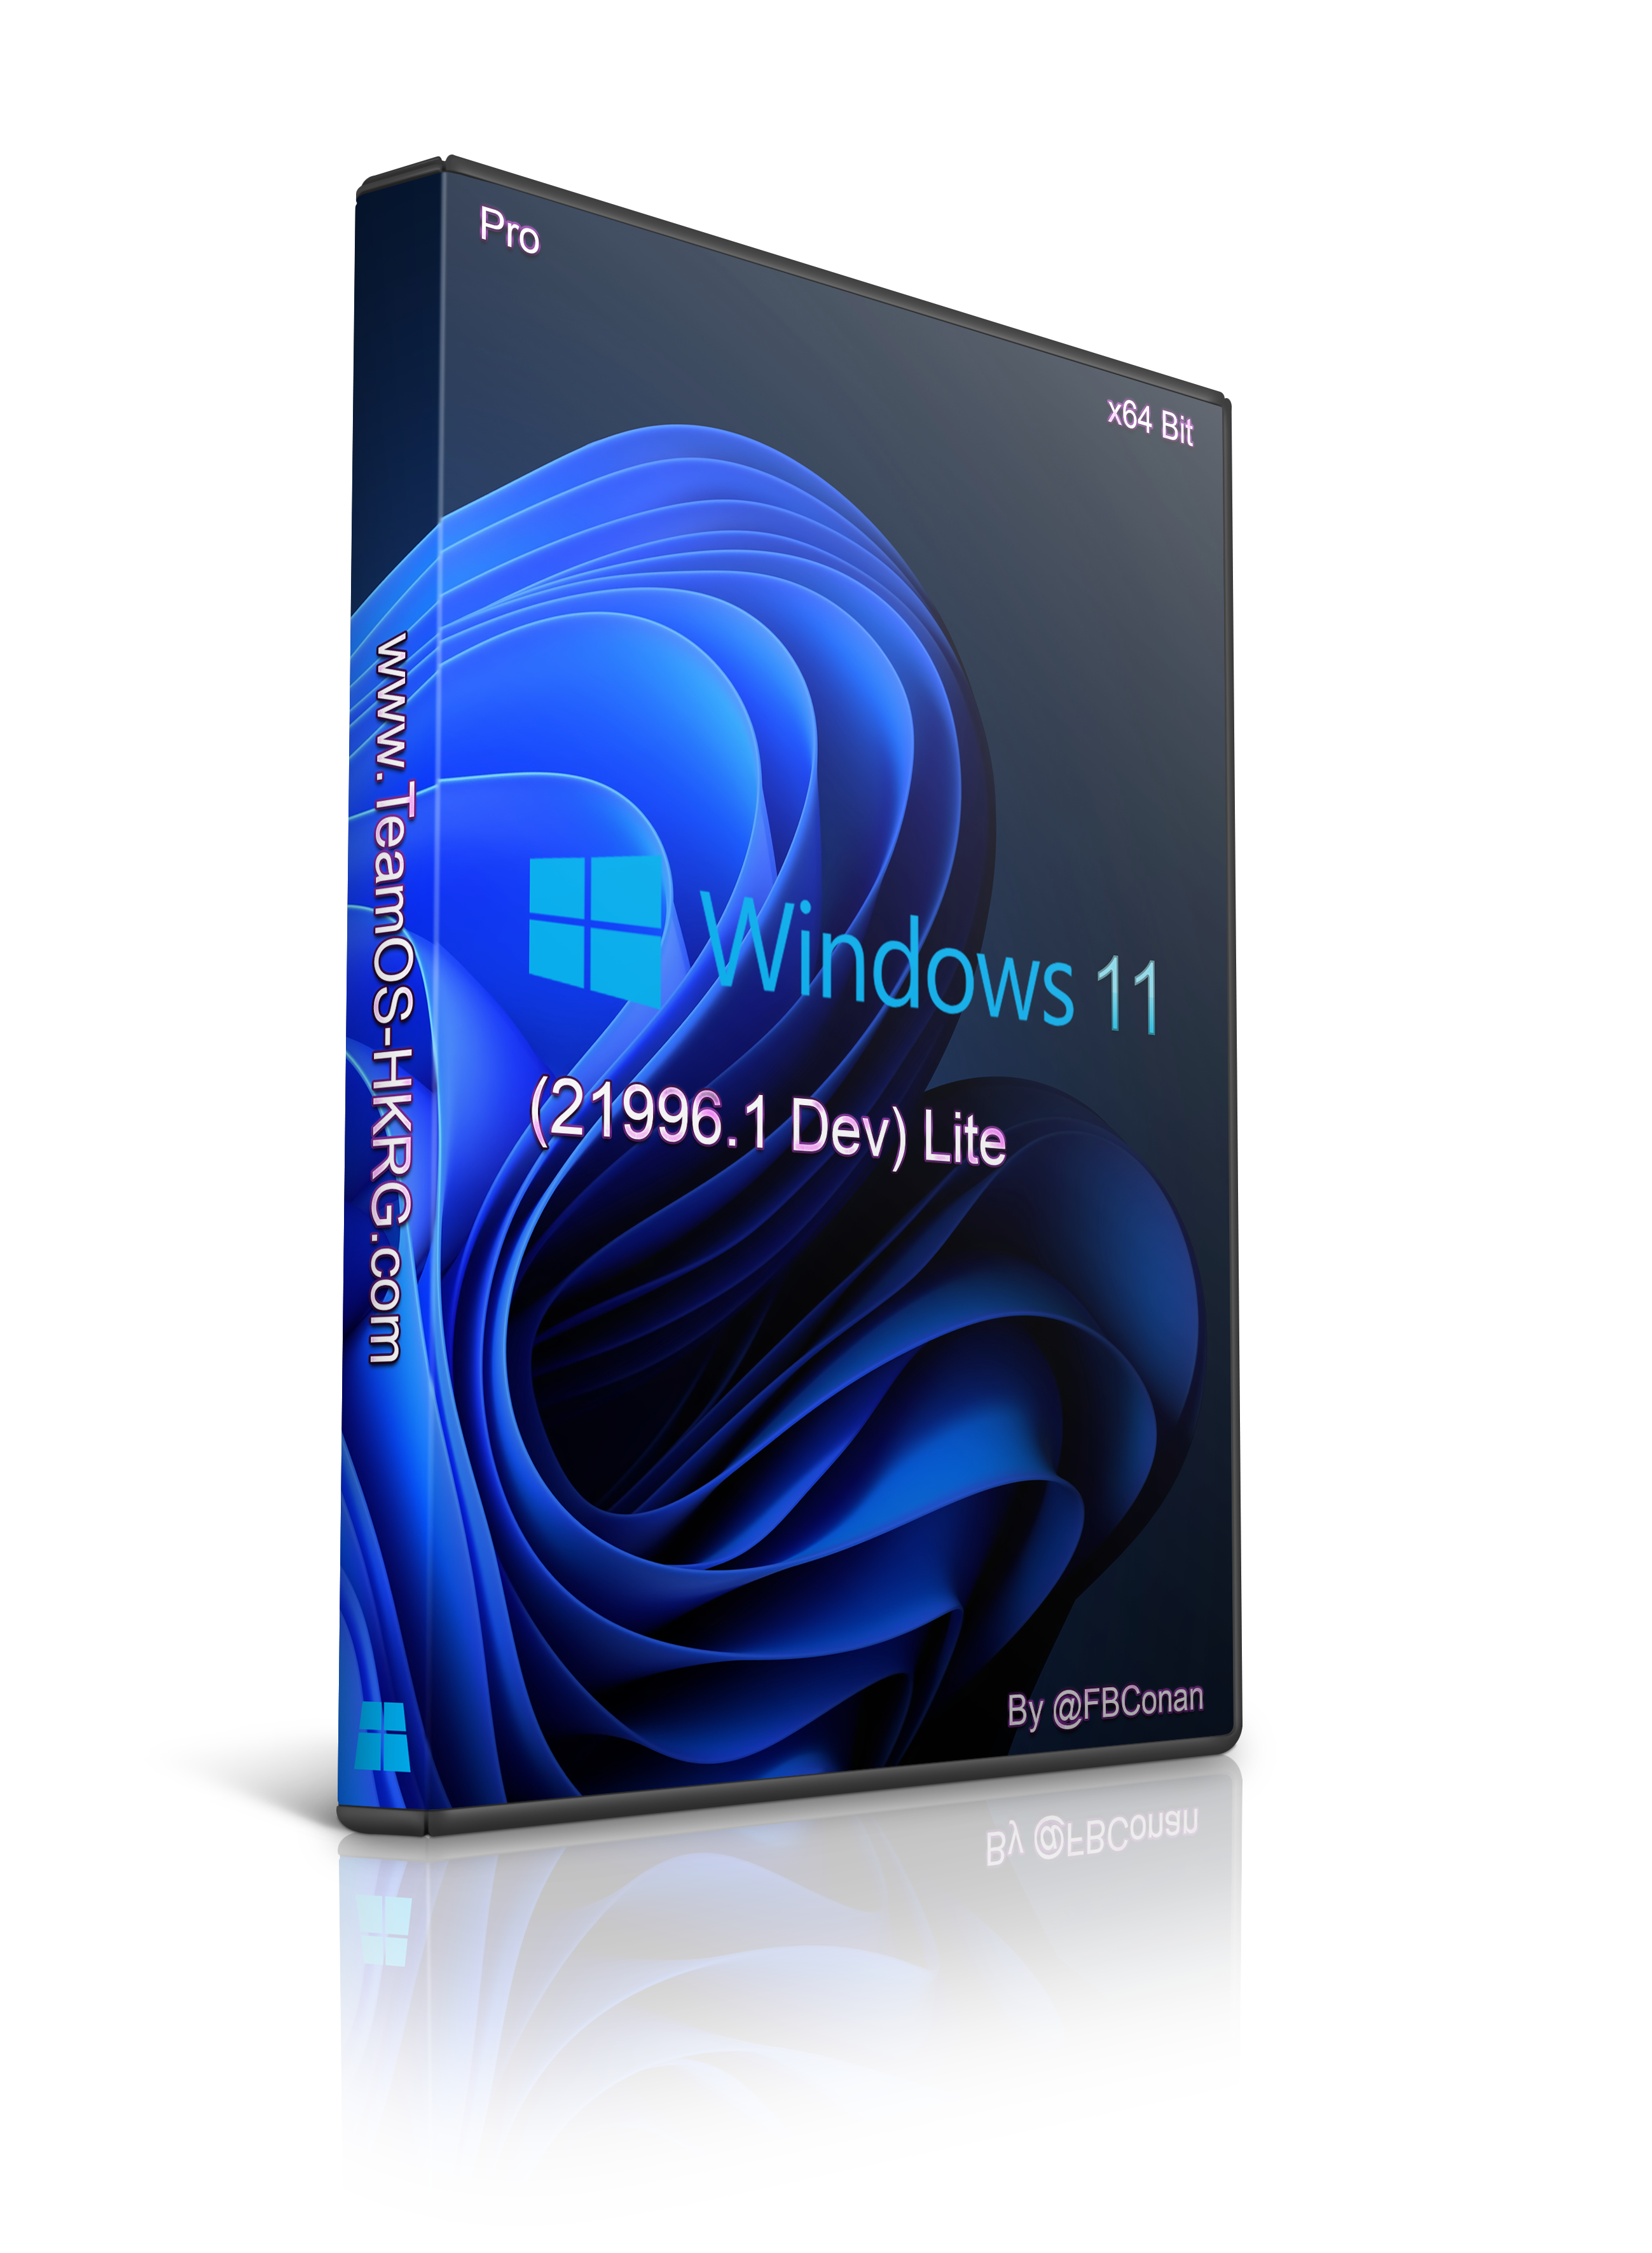 TUNGTEK — Windows 11 Super Lite. Dowsload : Windows 11 Xtreme LiteOS…, by  TUNGTEK Tùng